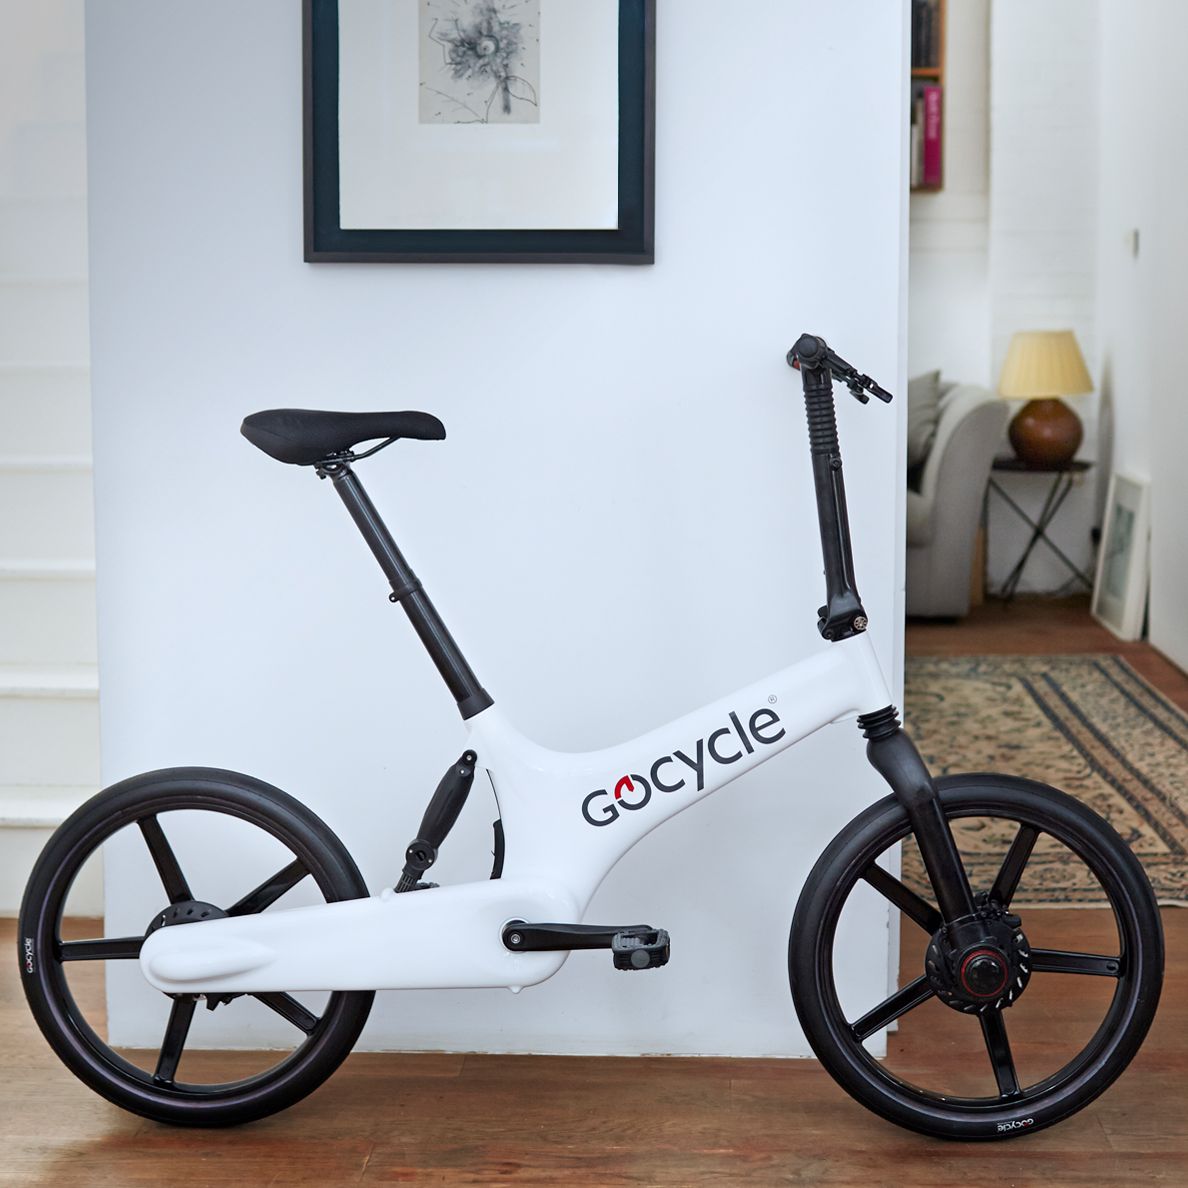 gocycle g3 price